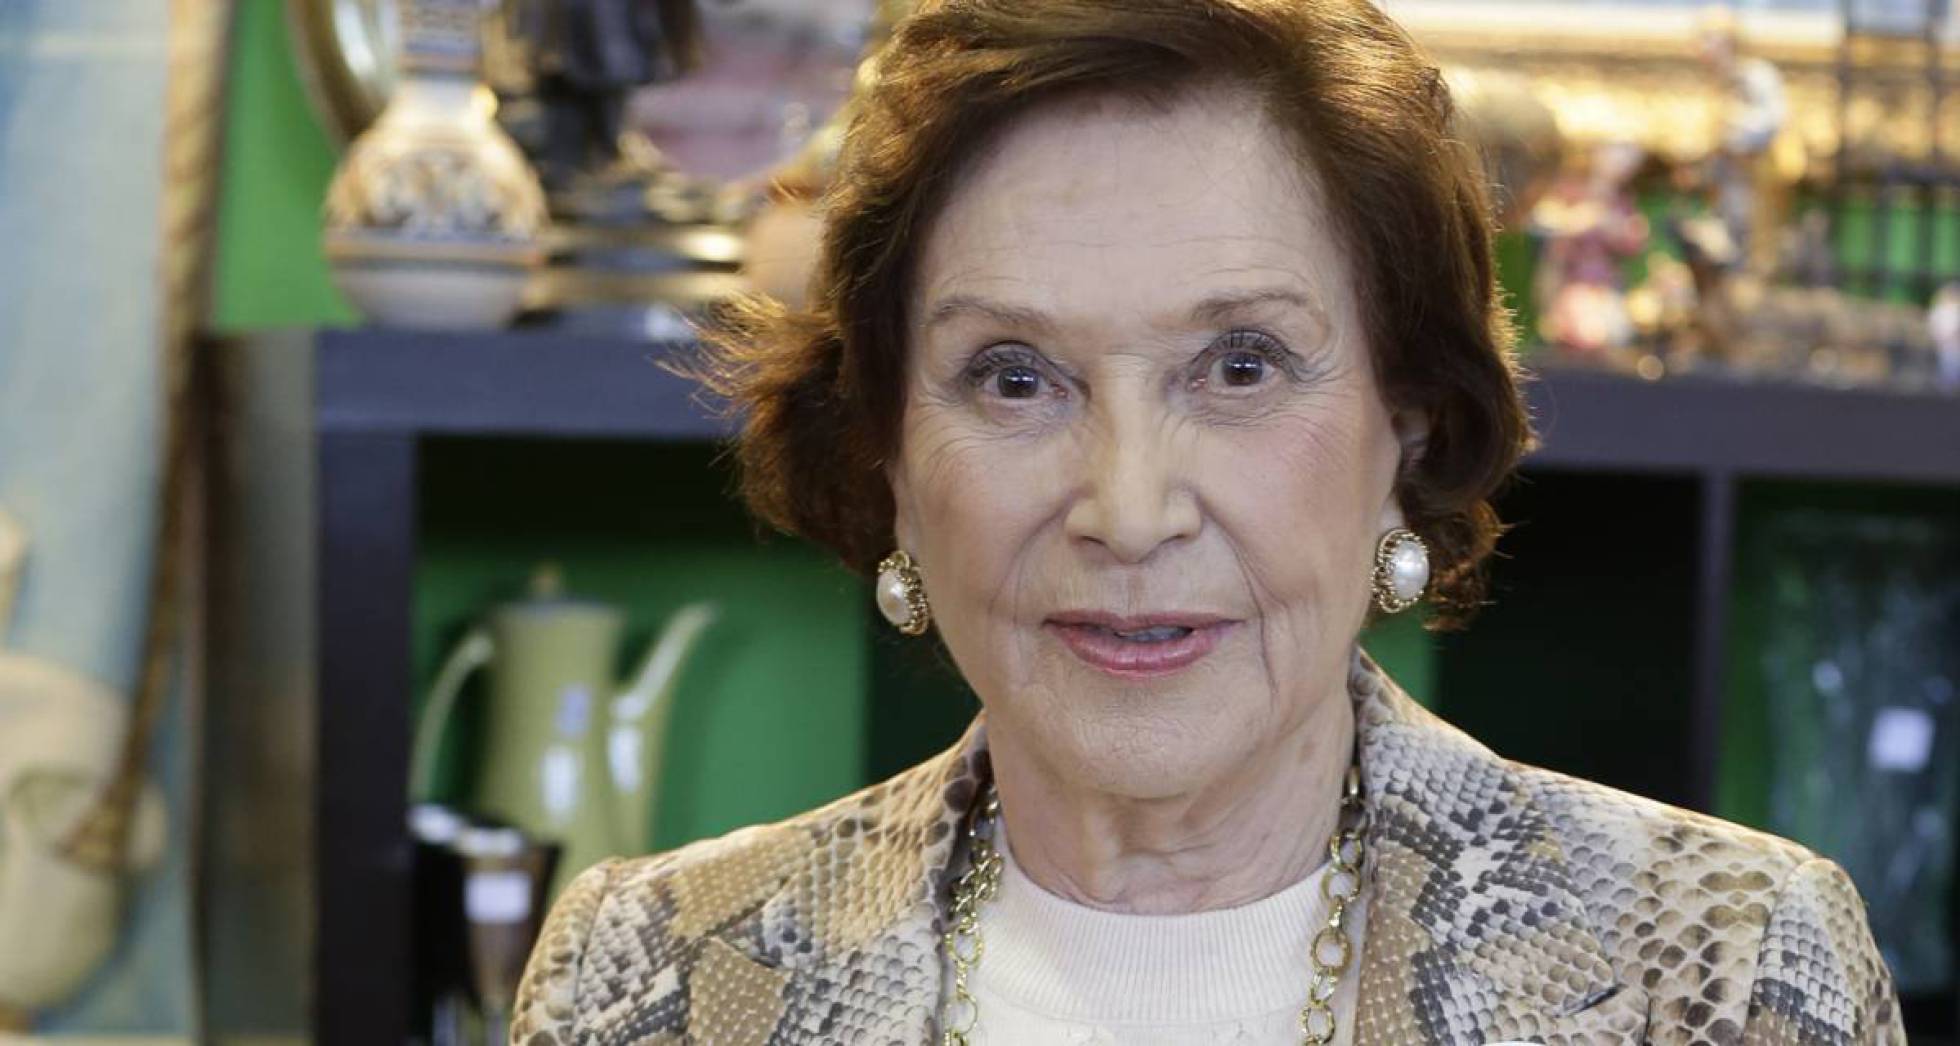 Daughter of Spanish dictator Franco dies, aged 91